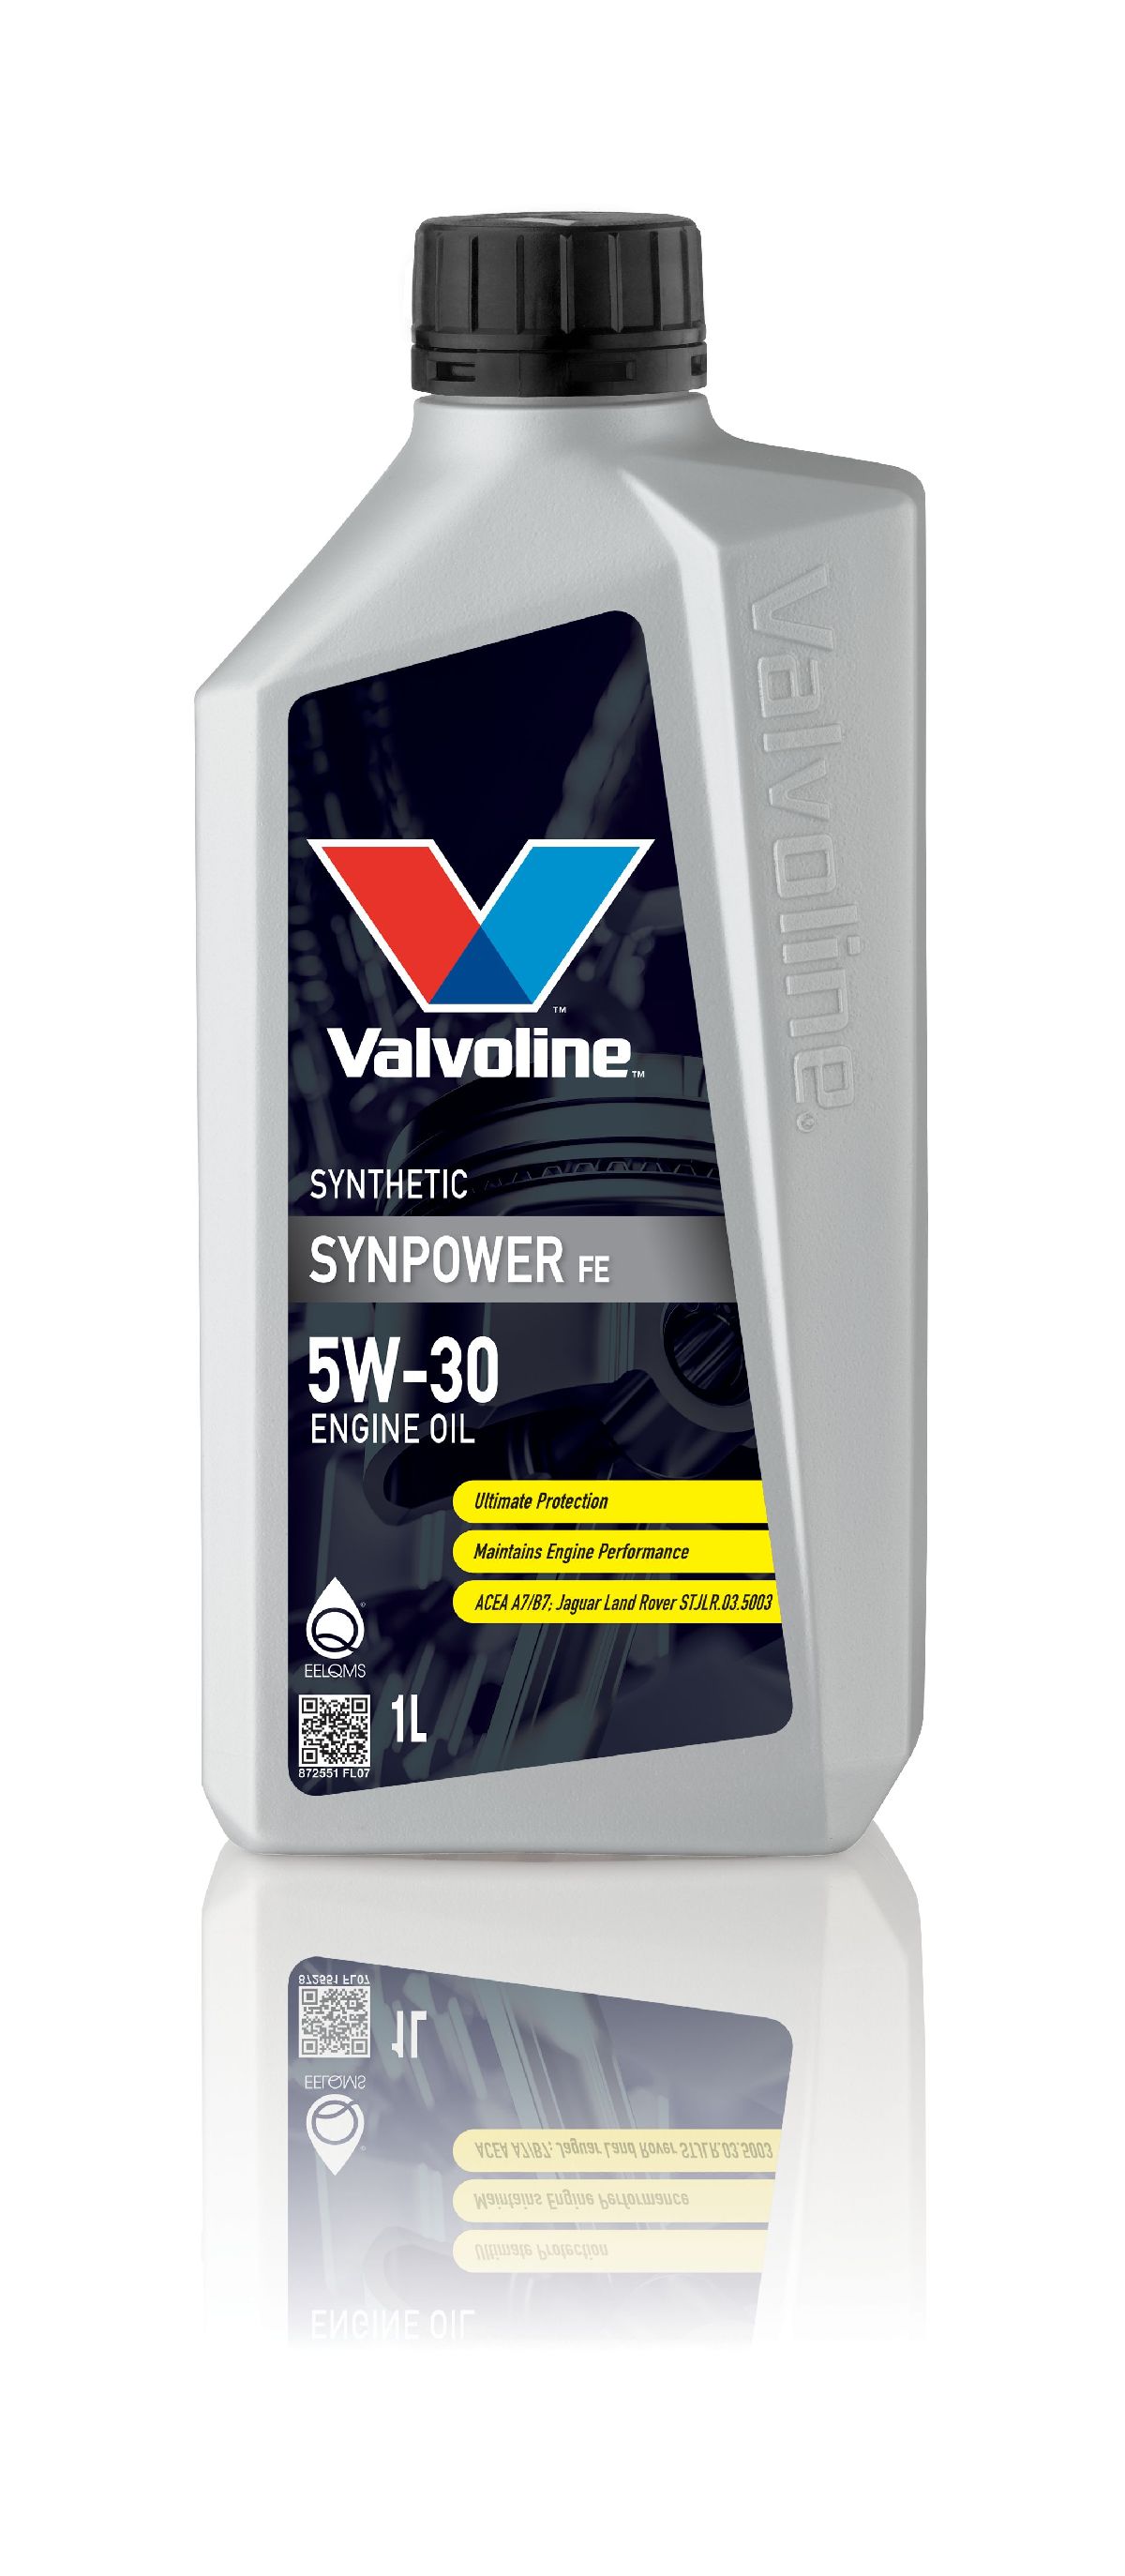 Valvoline Synpower FE 5W-30